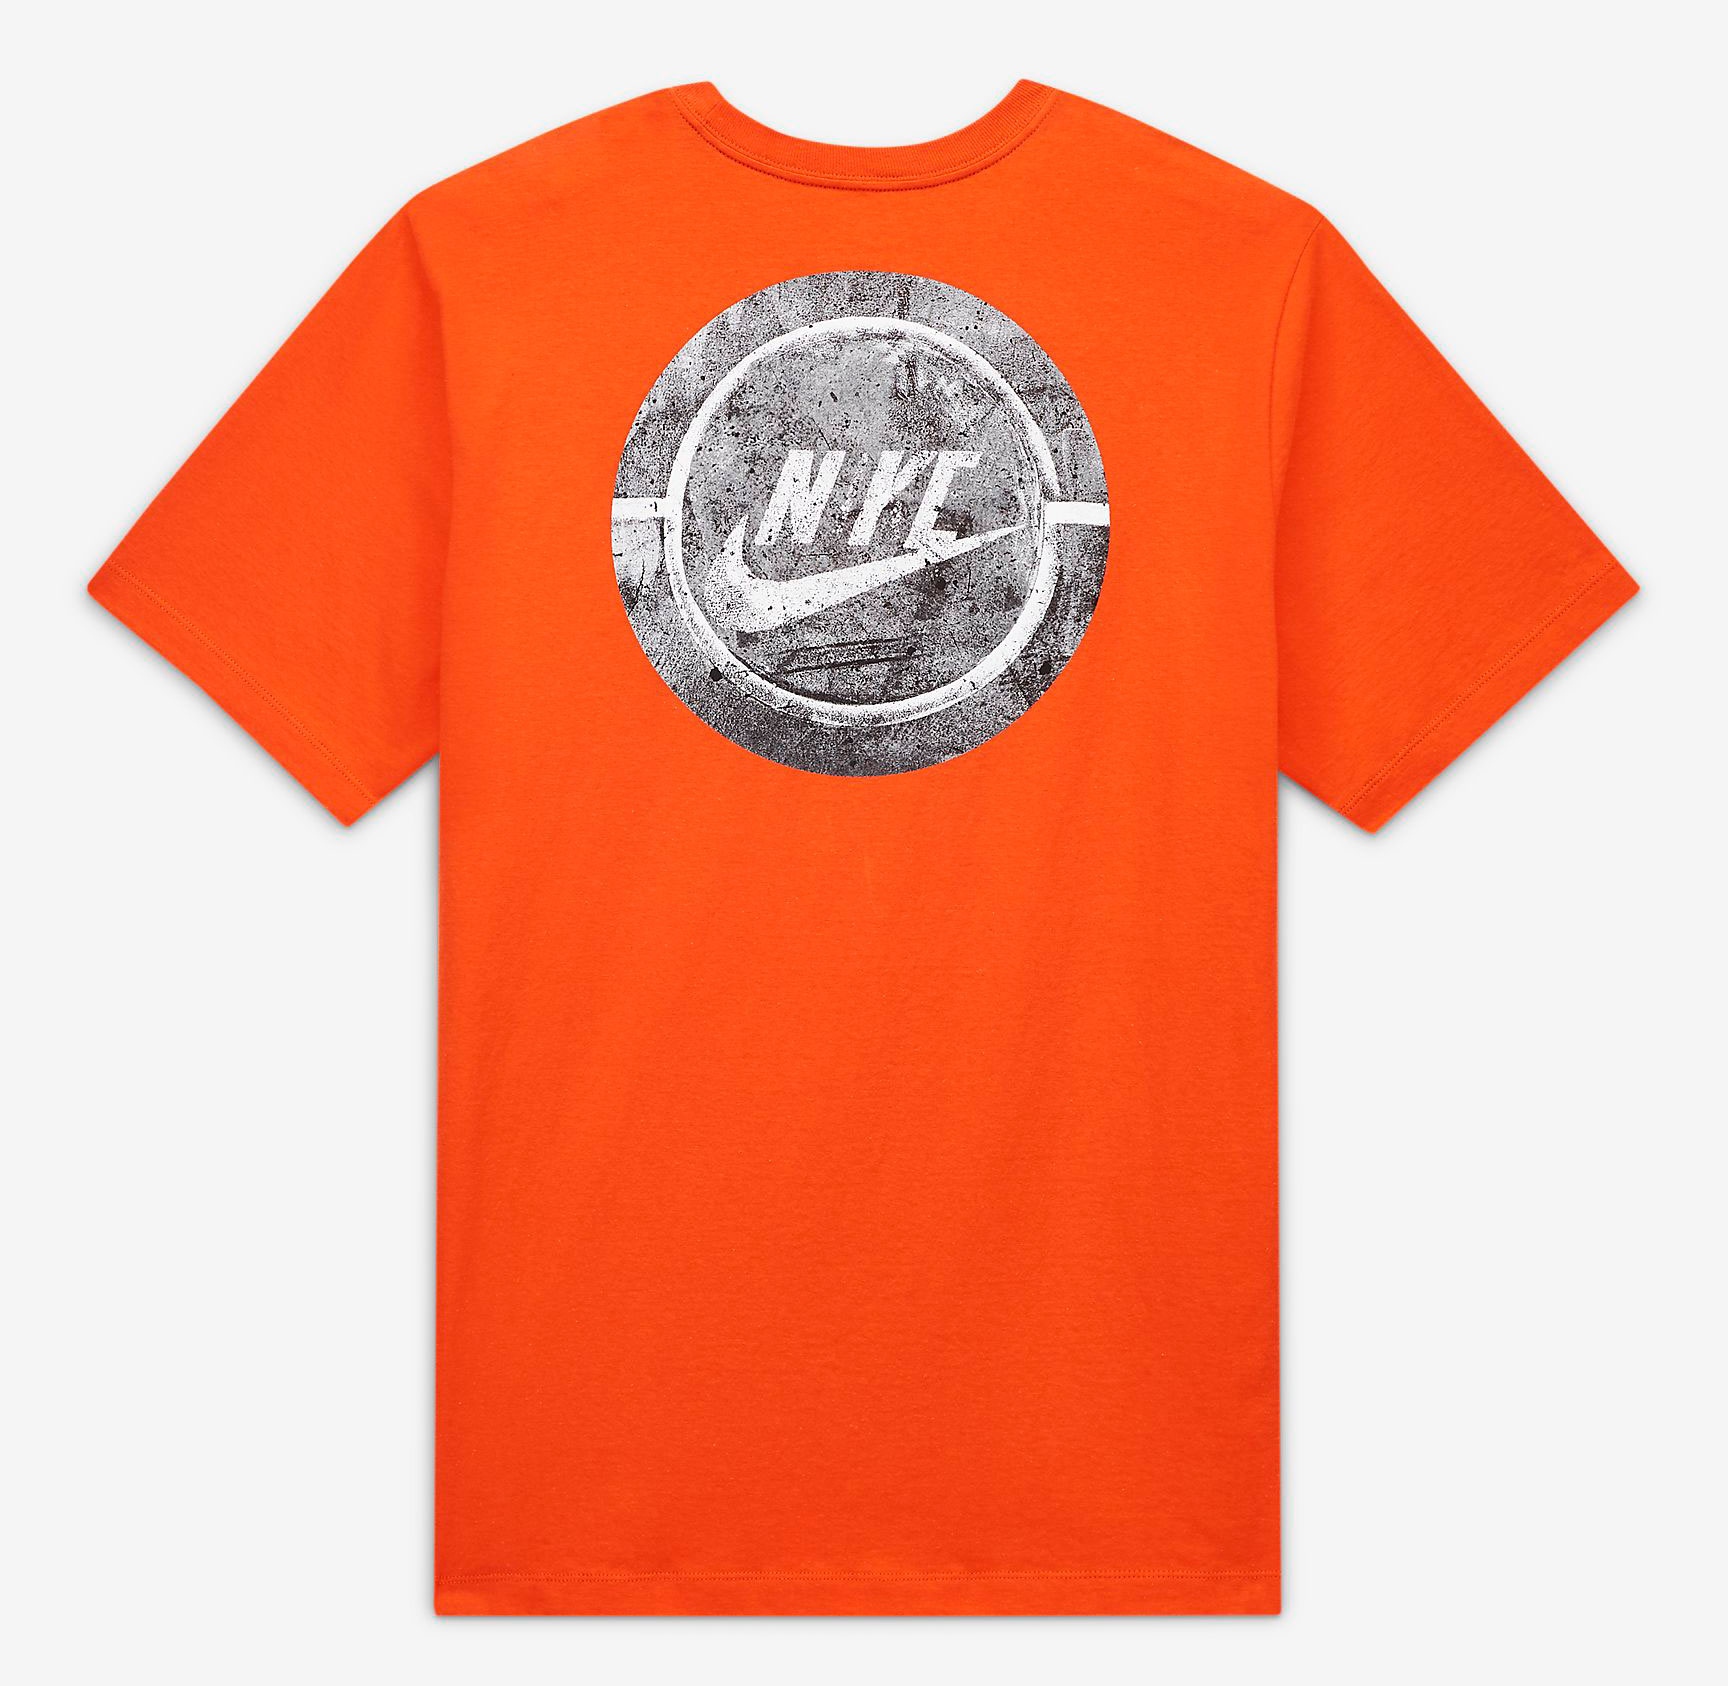 nike-nyc-orange-shirt-2